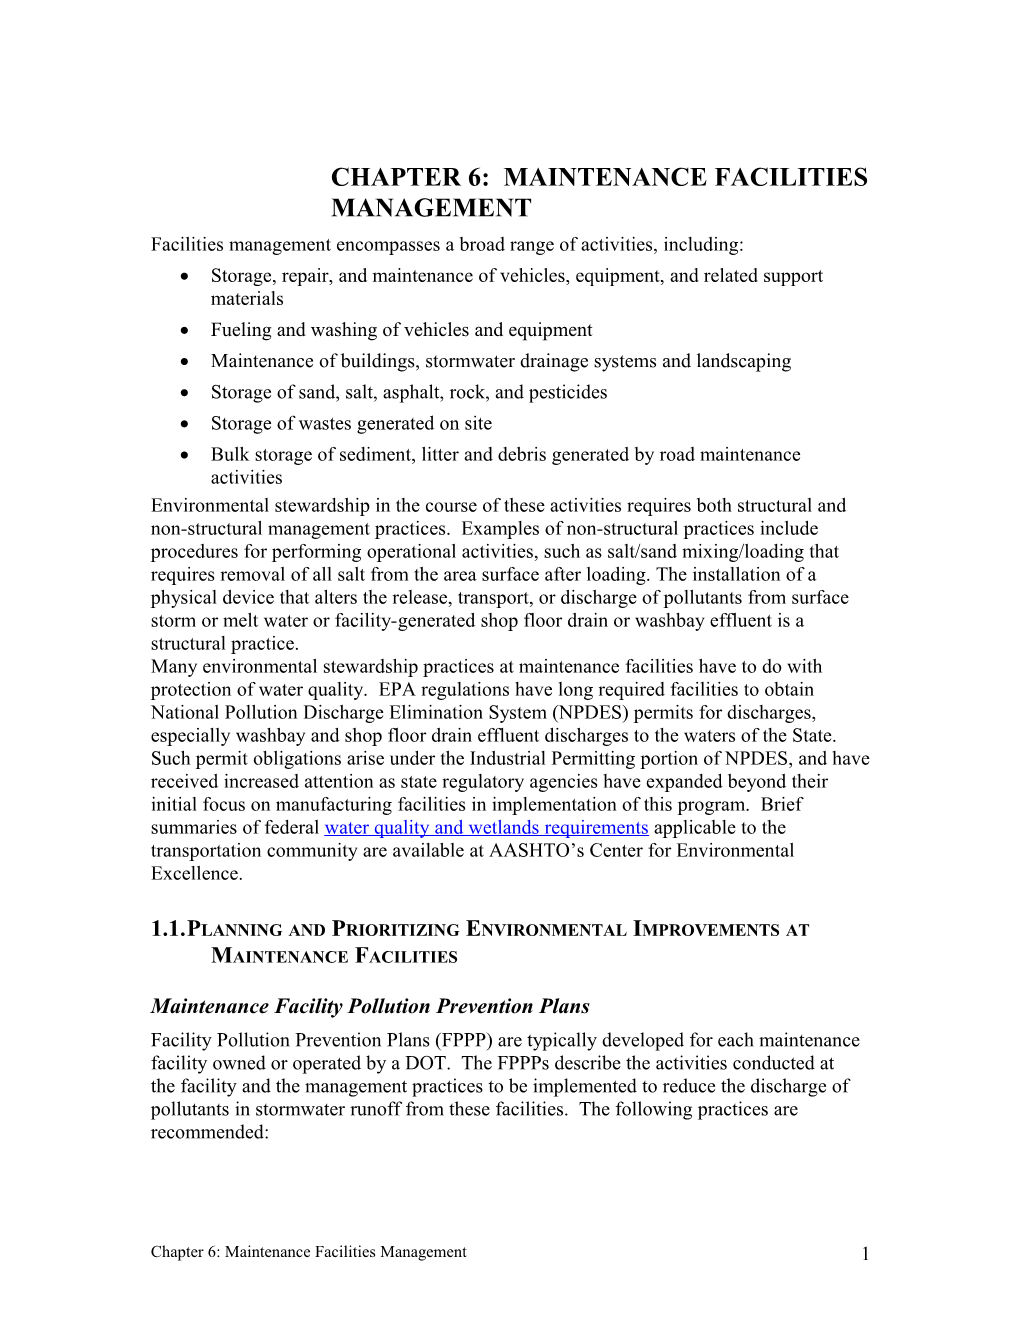 Chapter 6: Maintenance Facilities Management